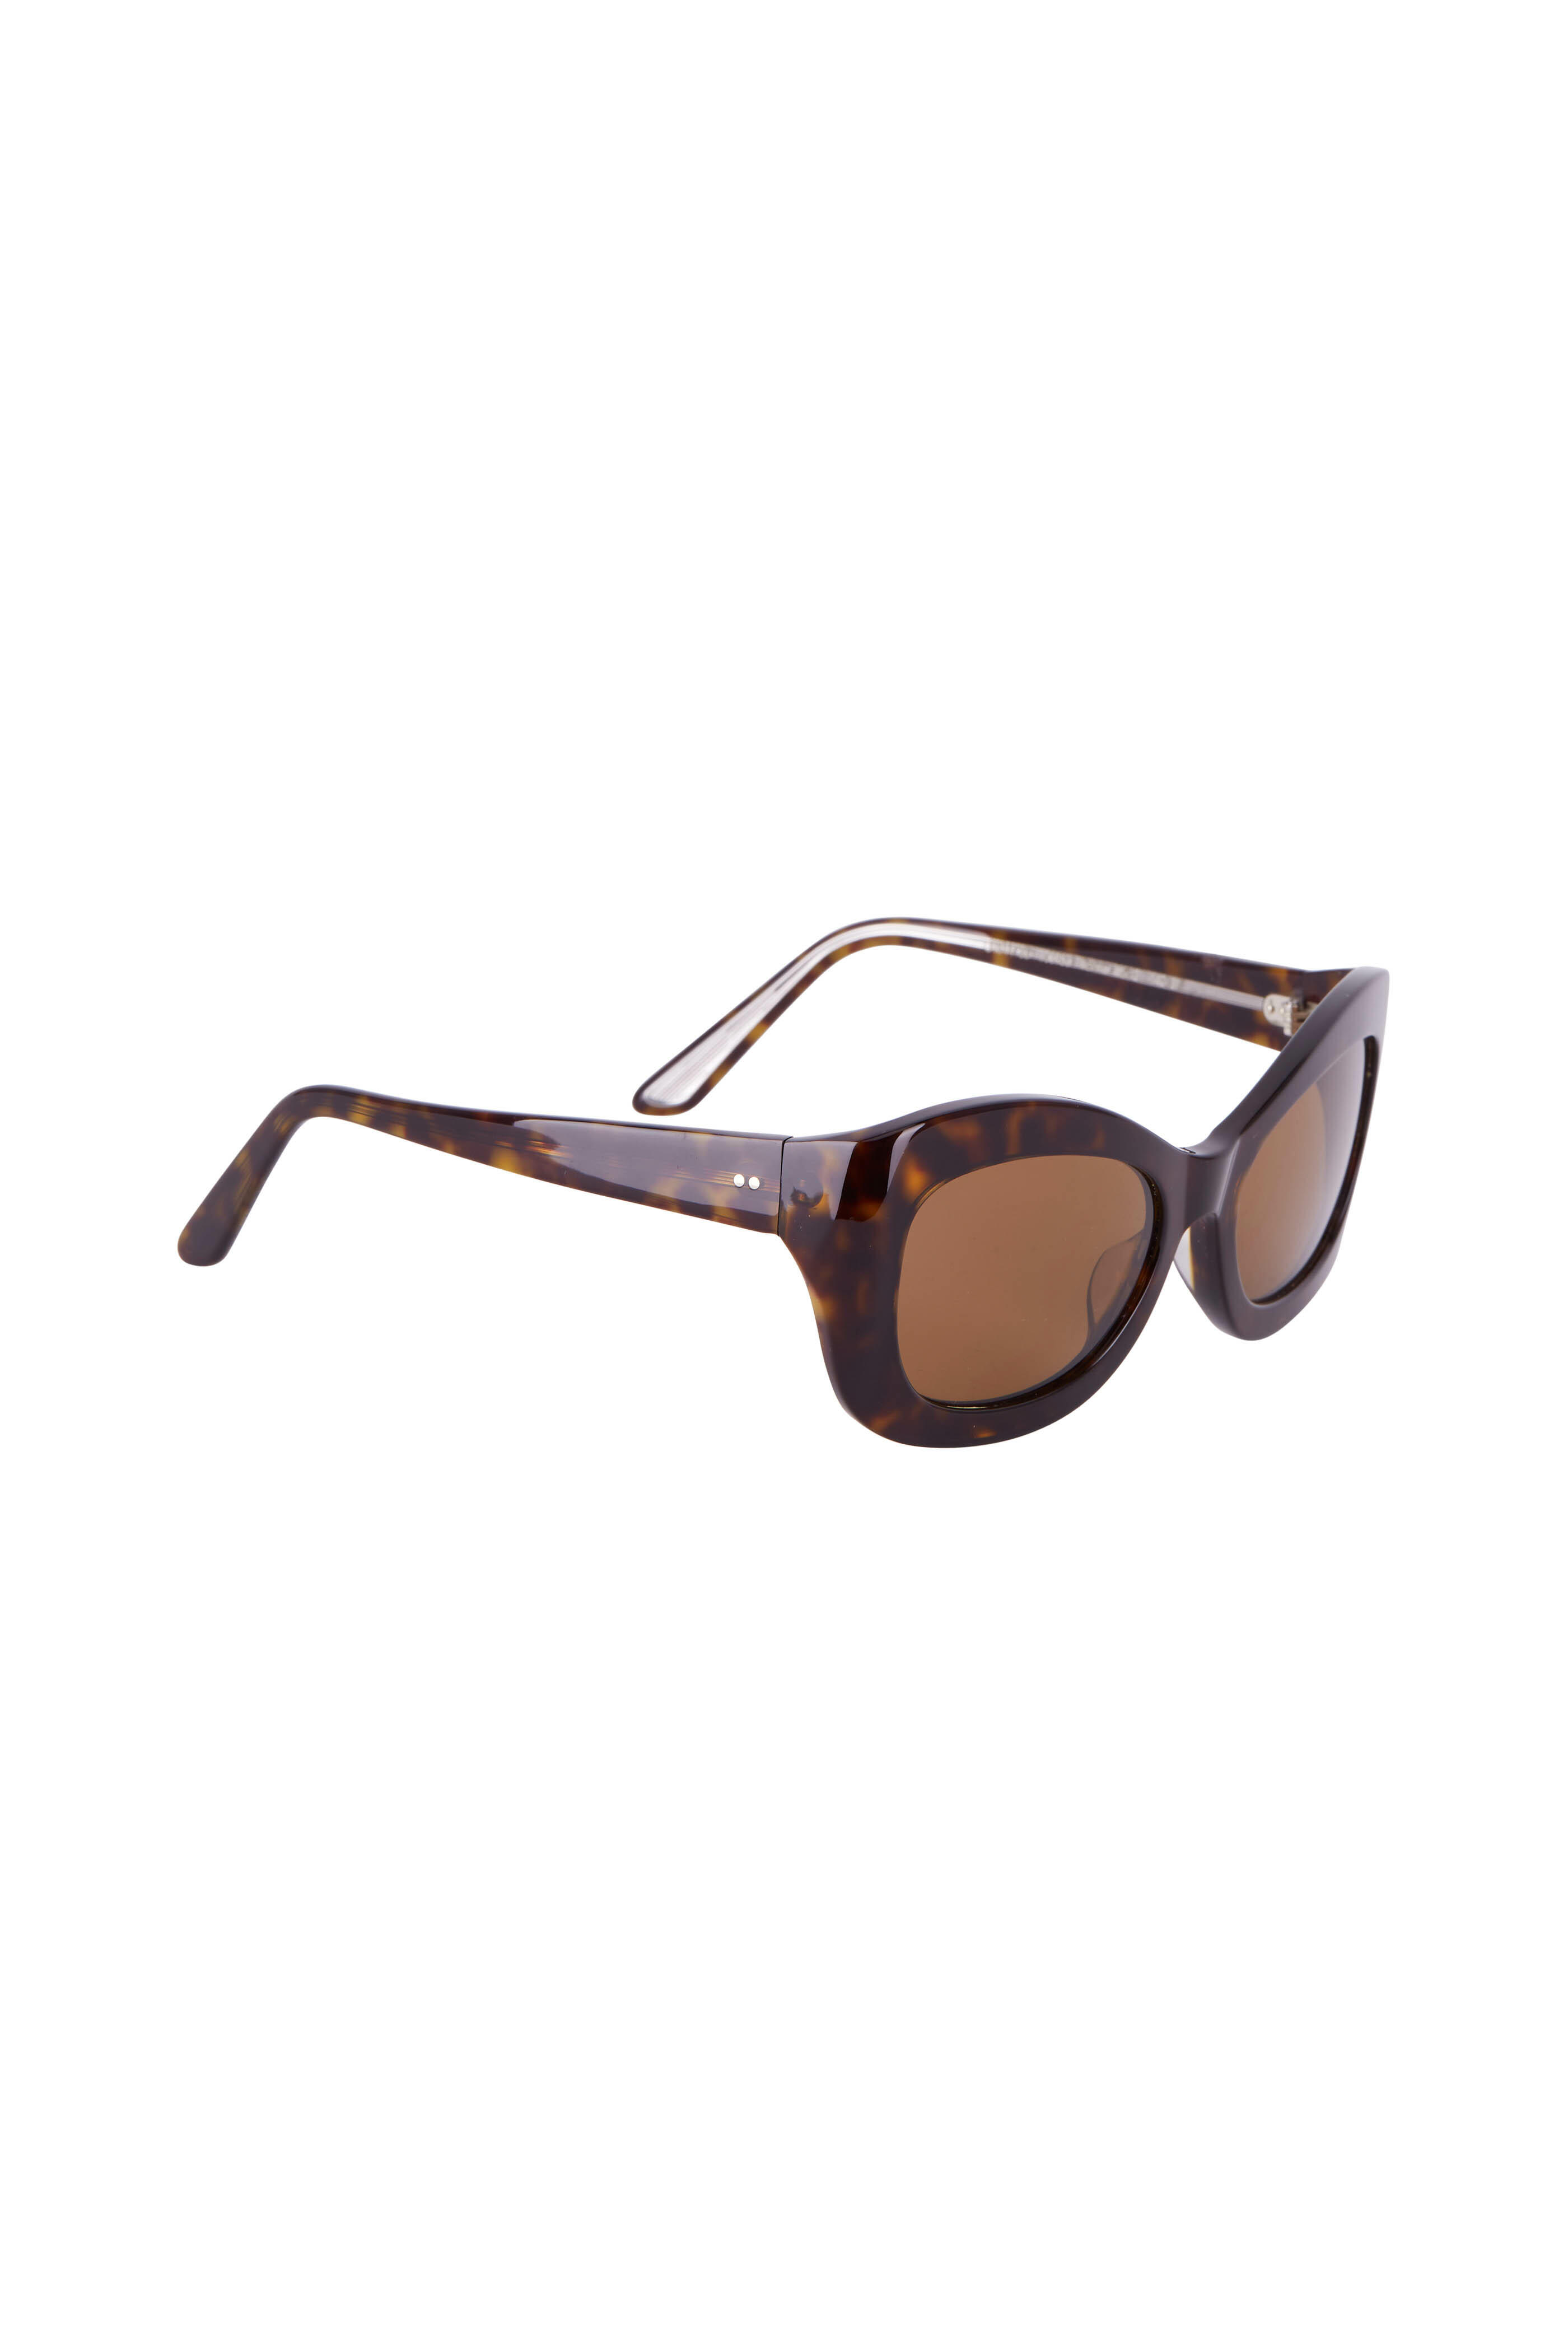 Oliver Peoples - The Row Edina Brown Polarized Sunglasses